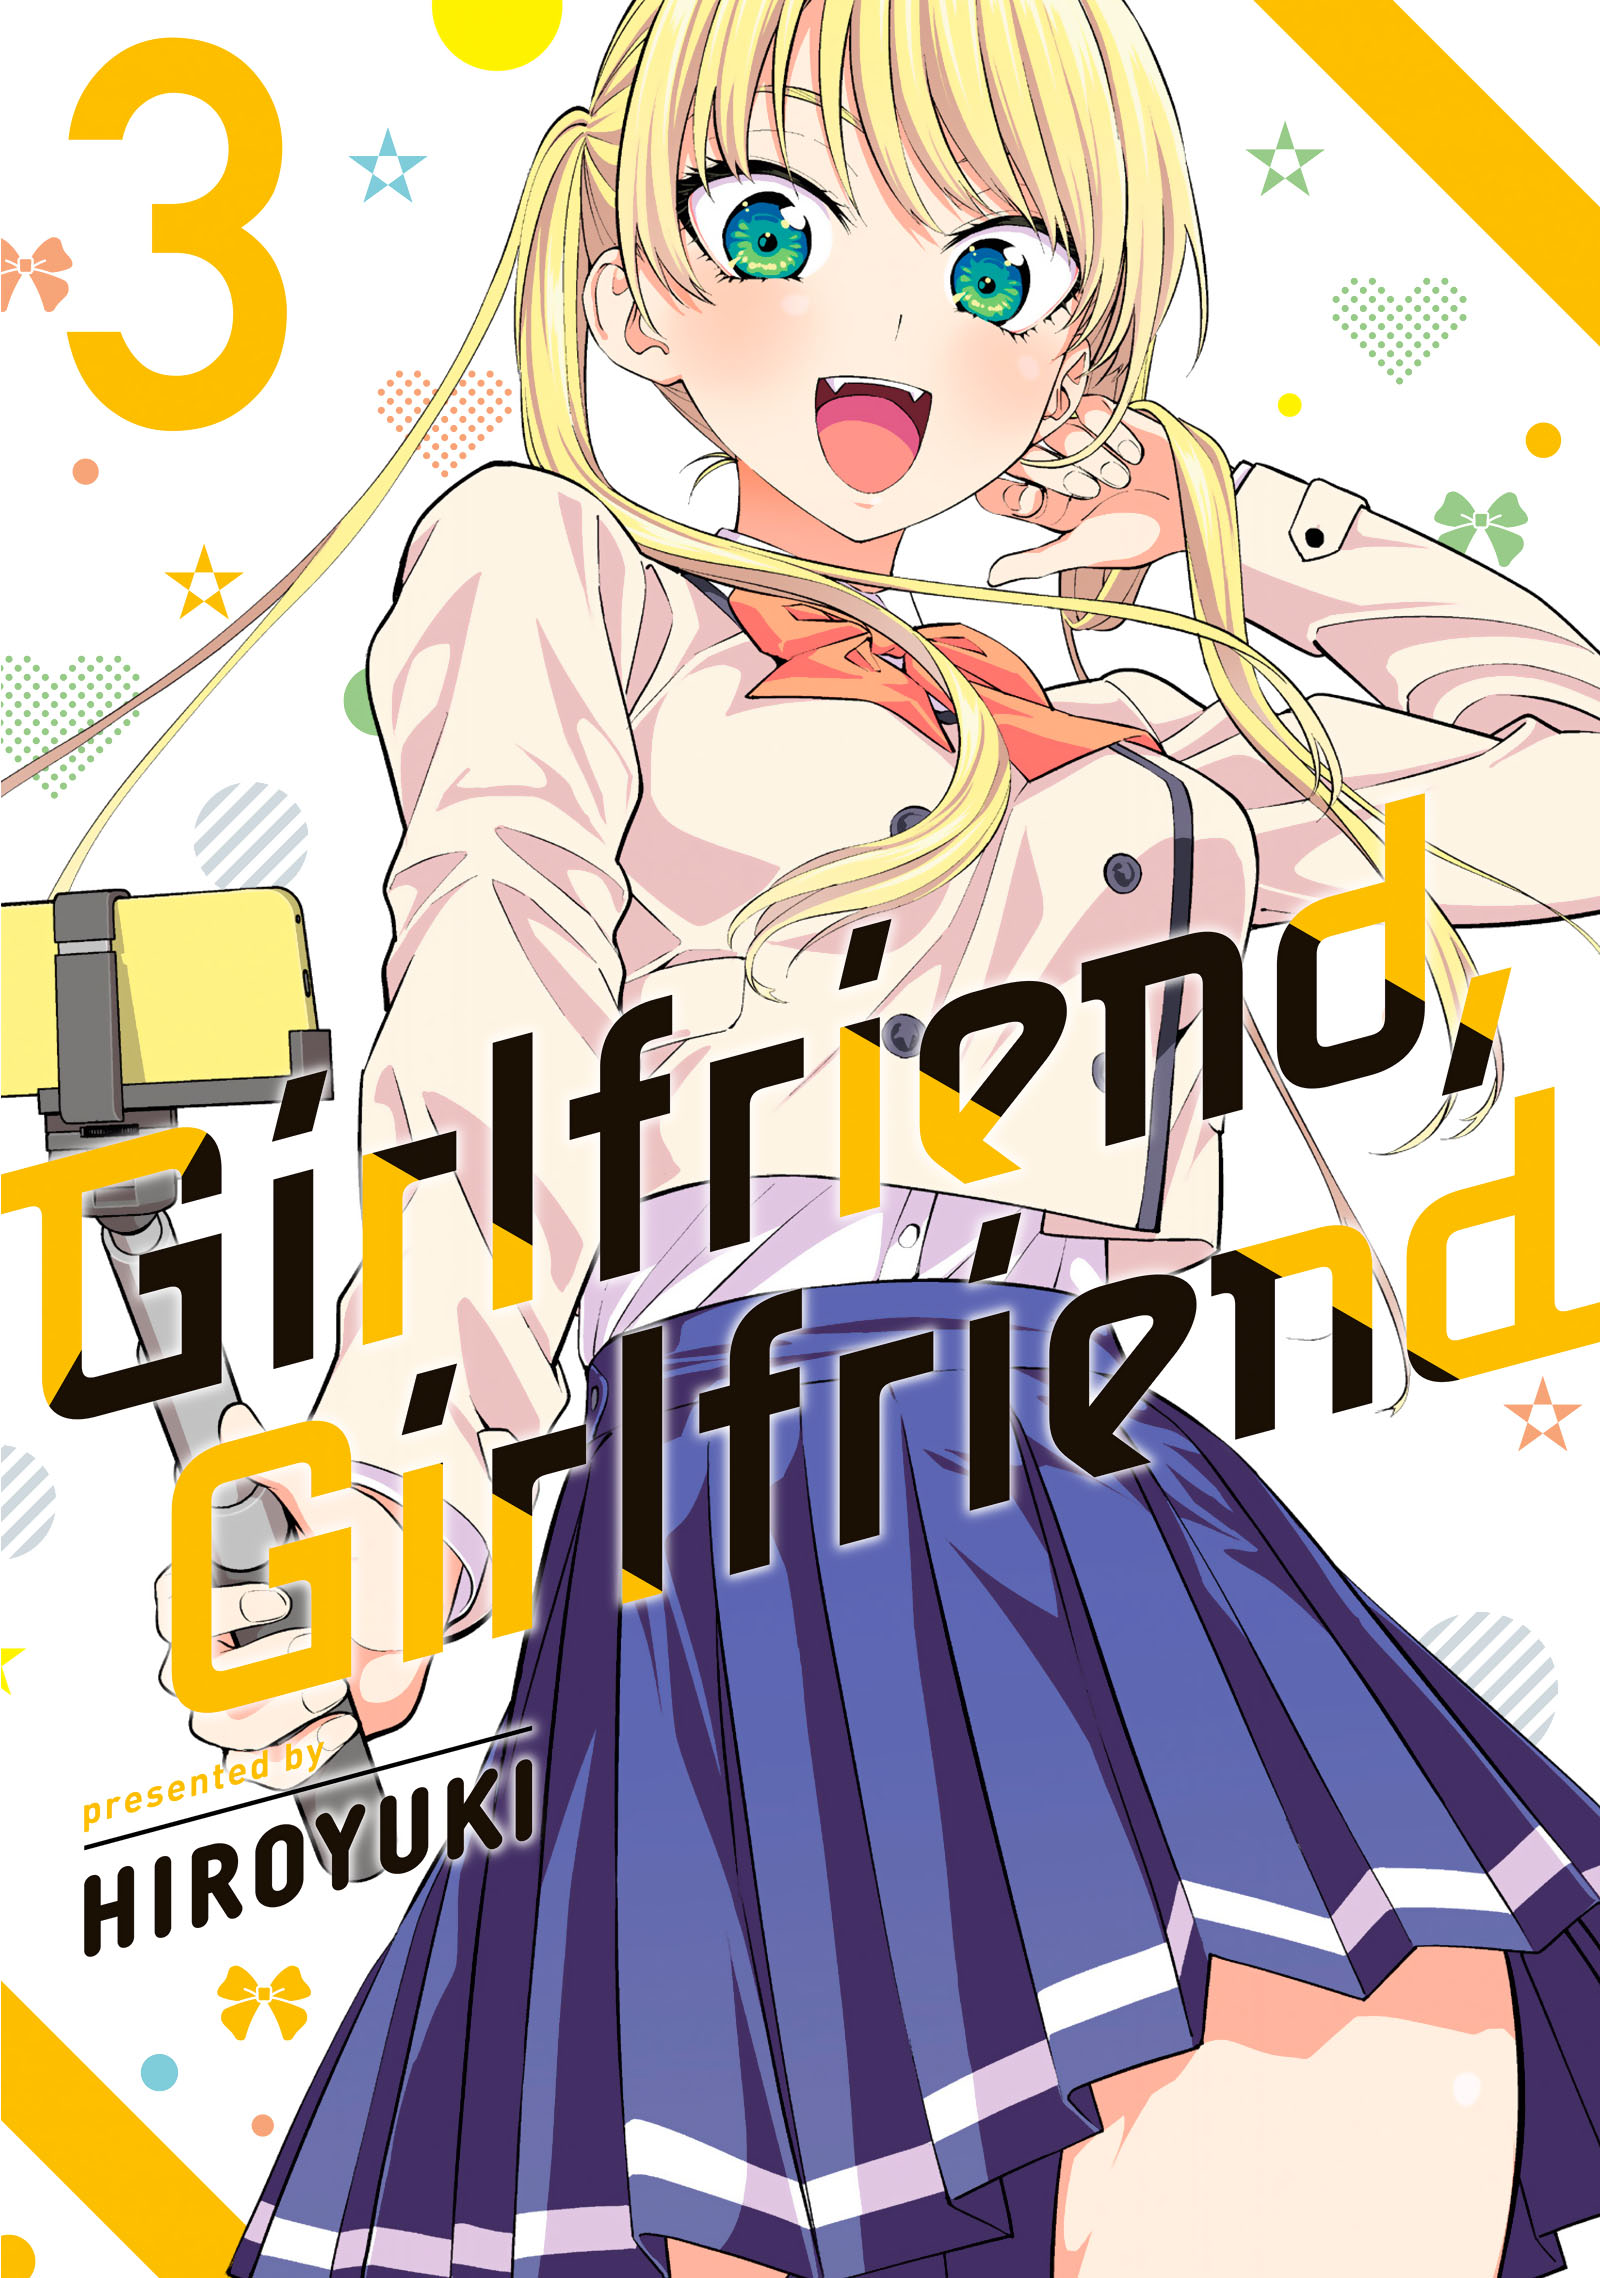 Girlfriend, Girlfriend Volume 3 - Cover